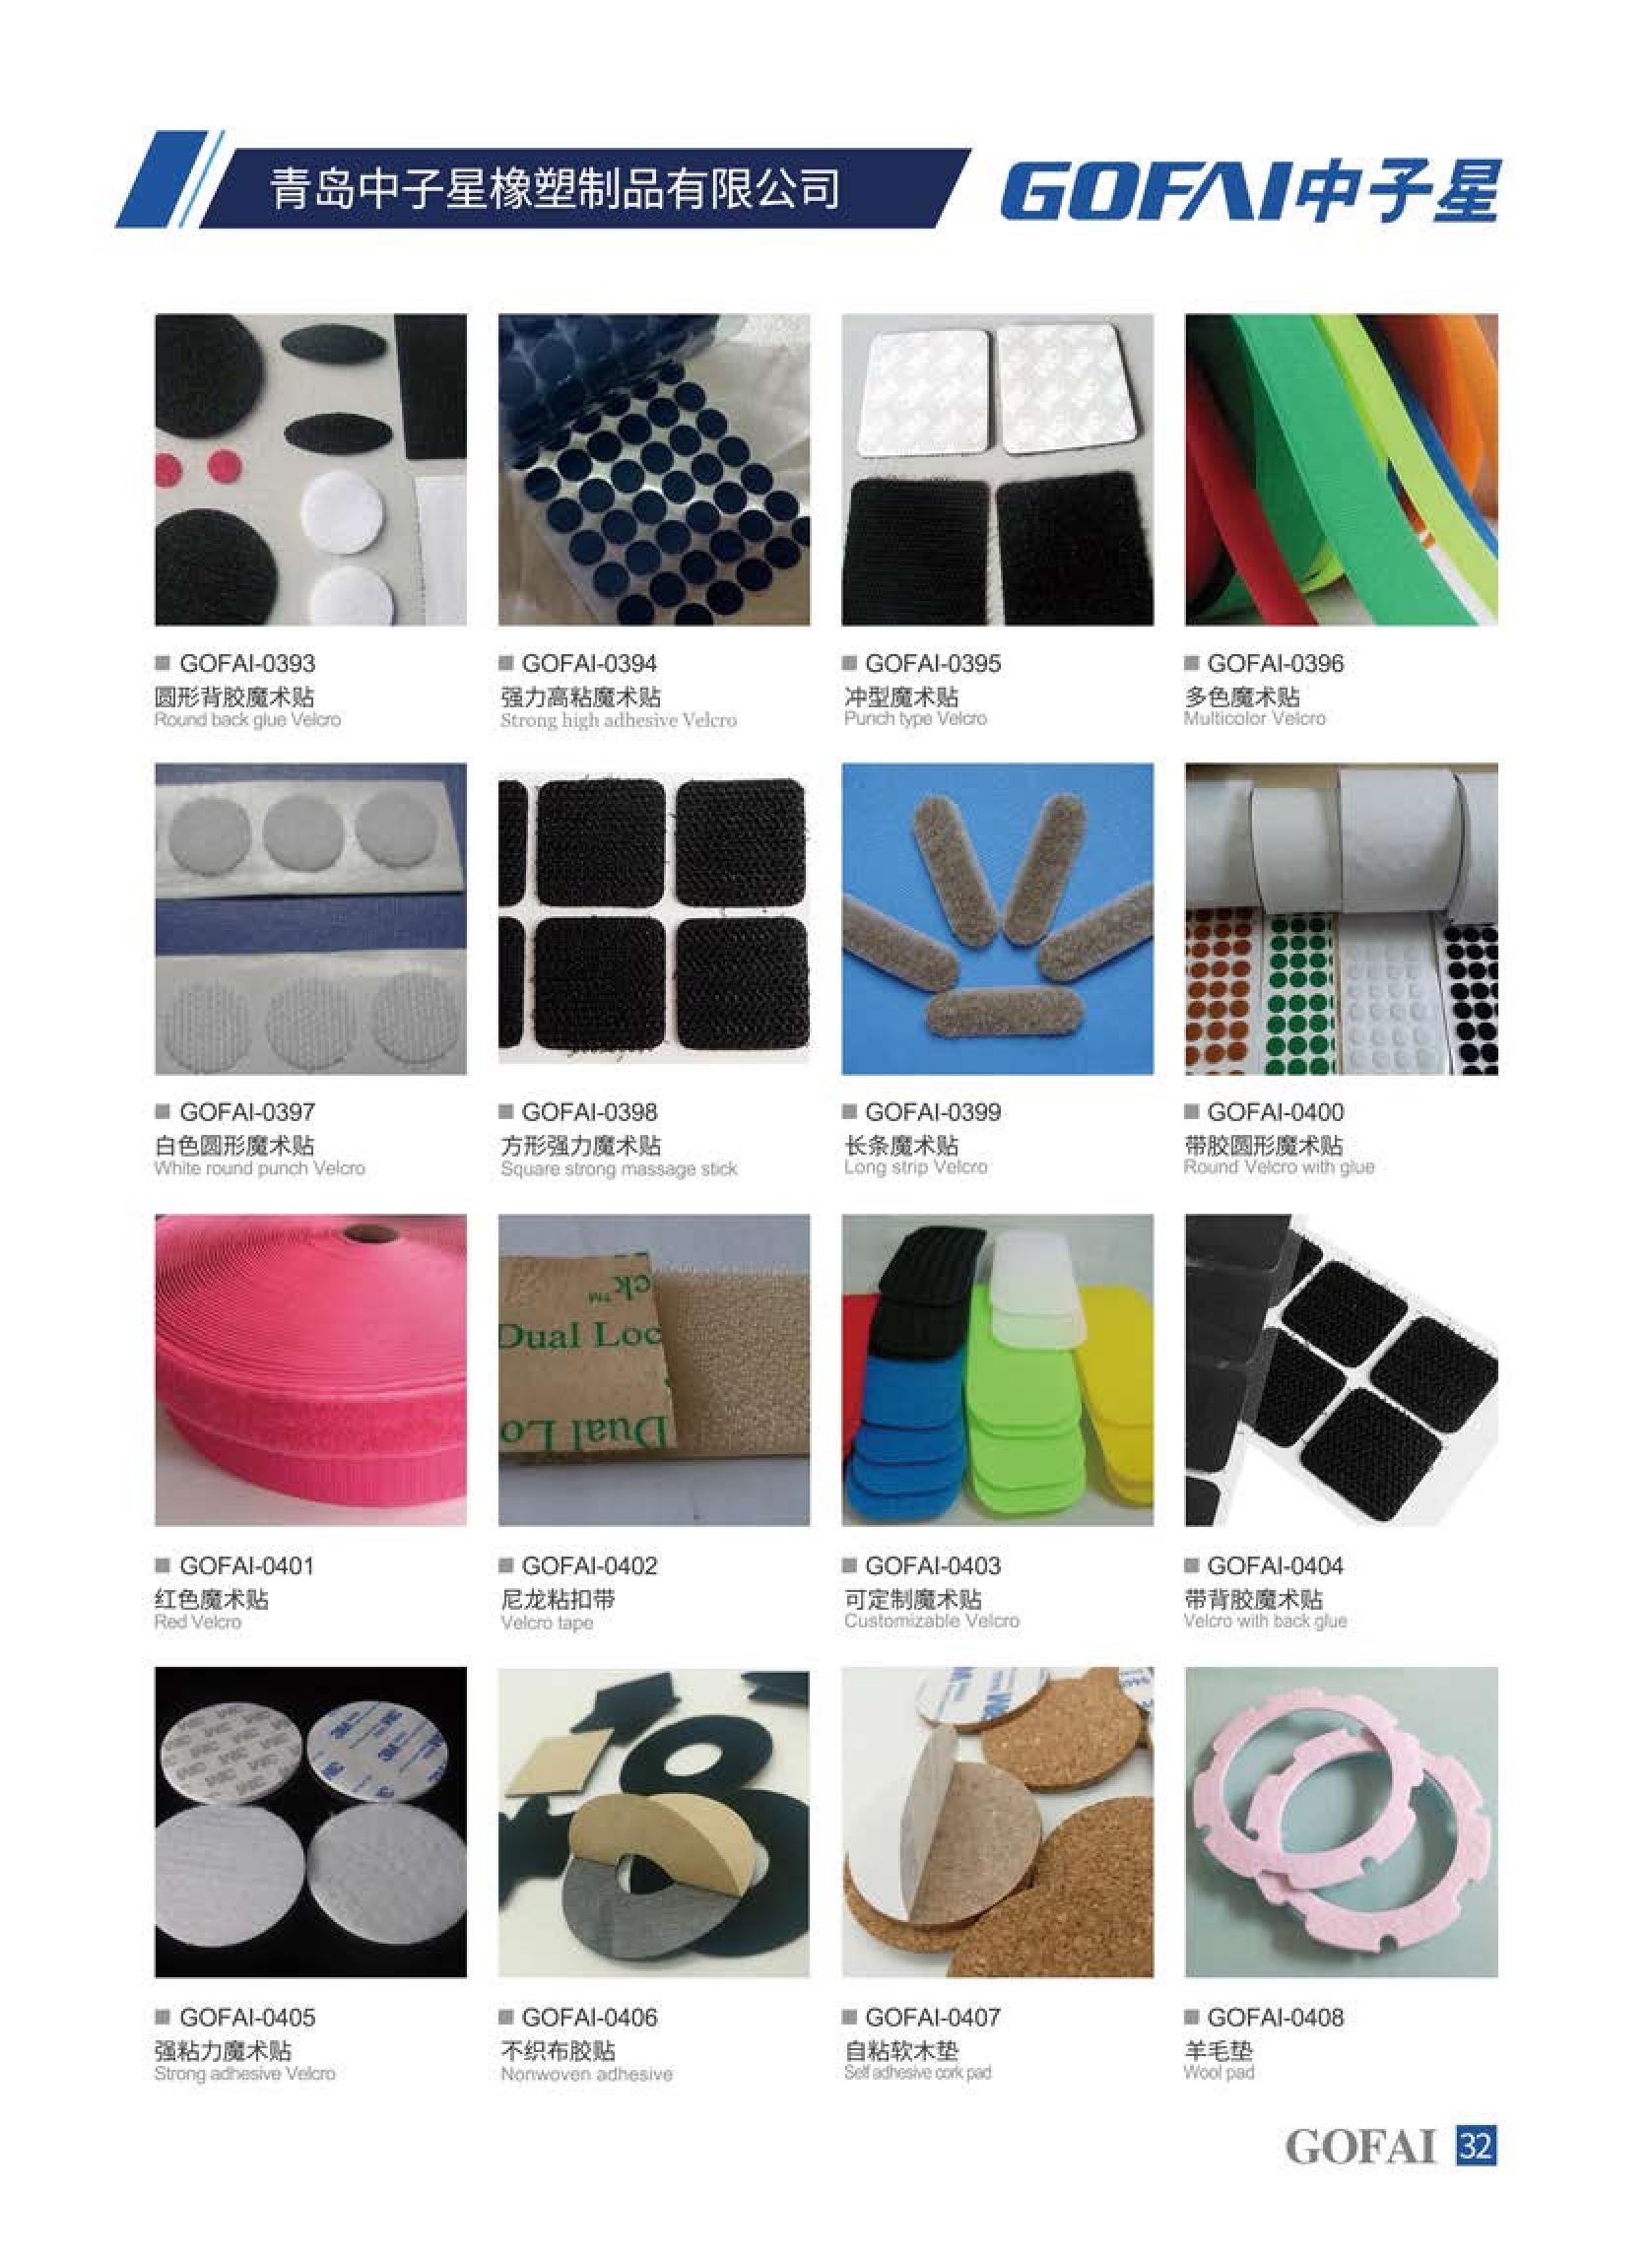 GOFAI self adhesive rubber pad catalog_34.jpg